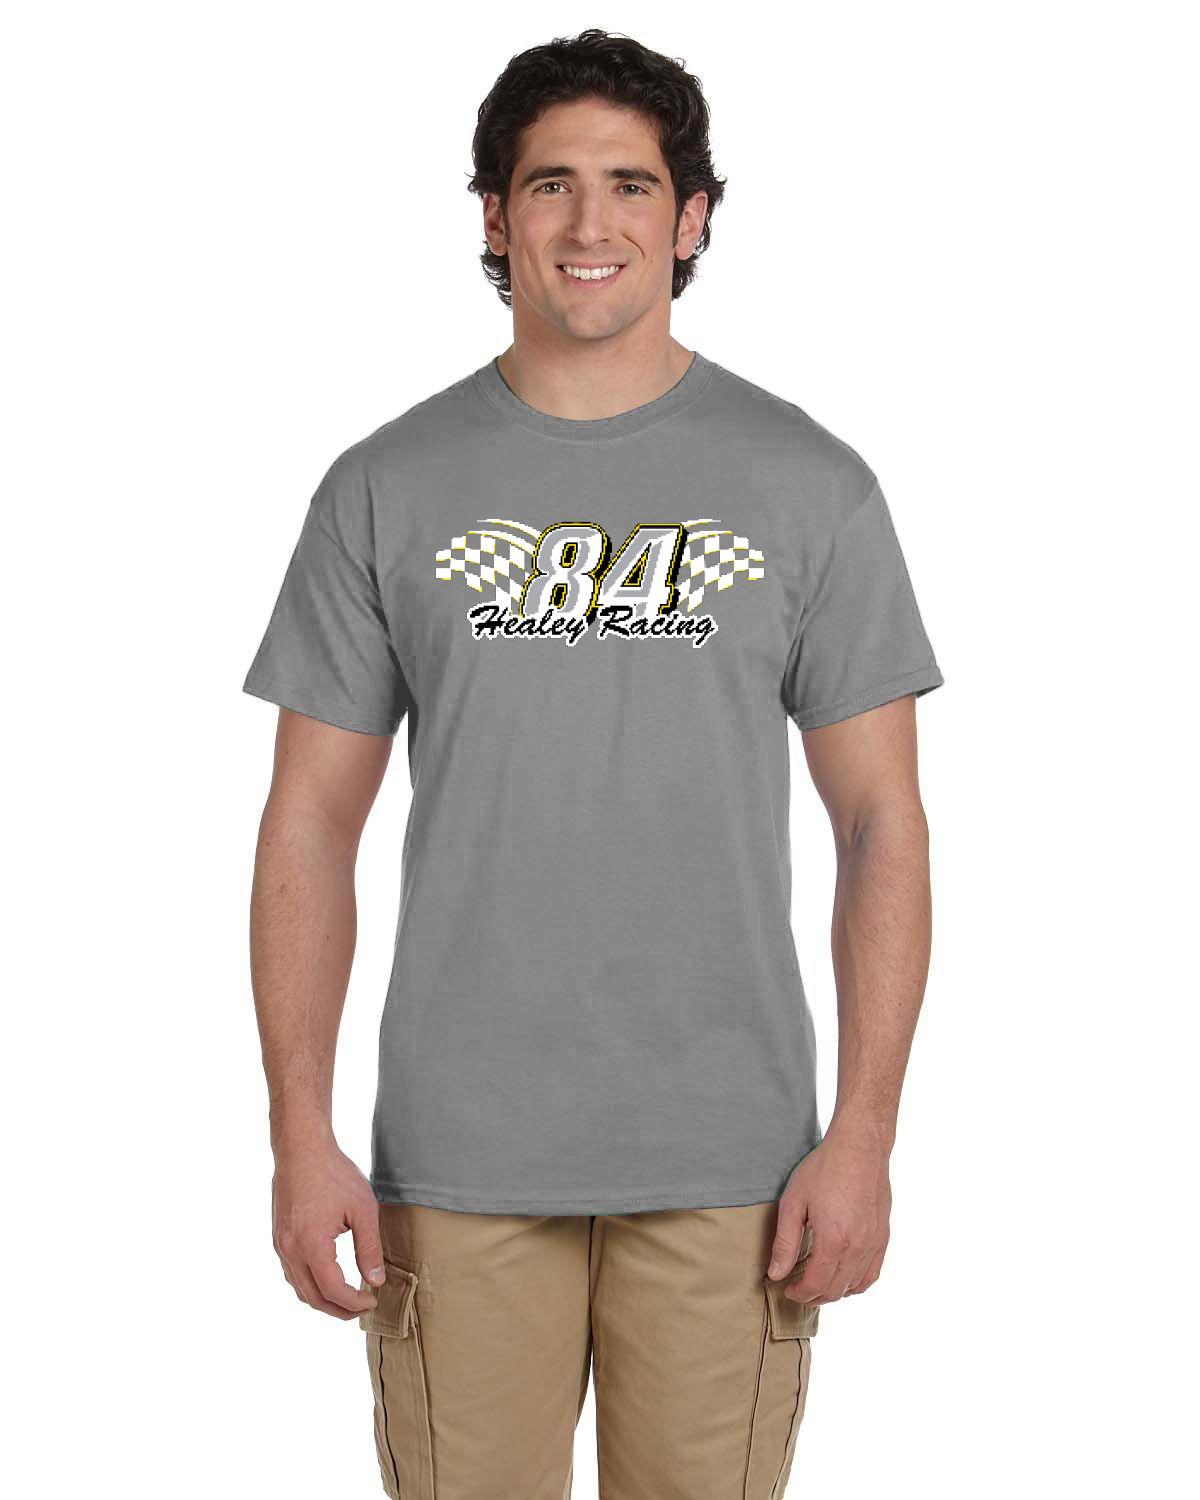 Healy Racing Men's T-Shirt